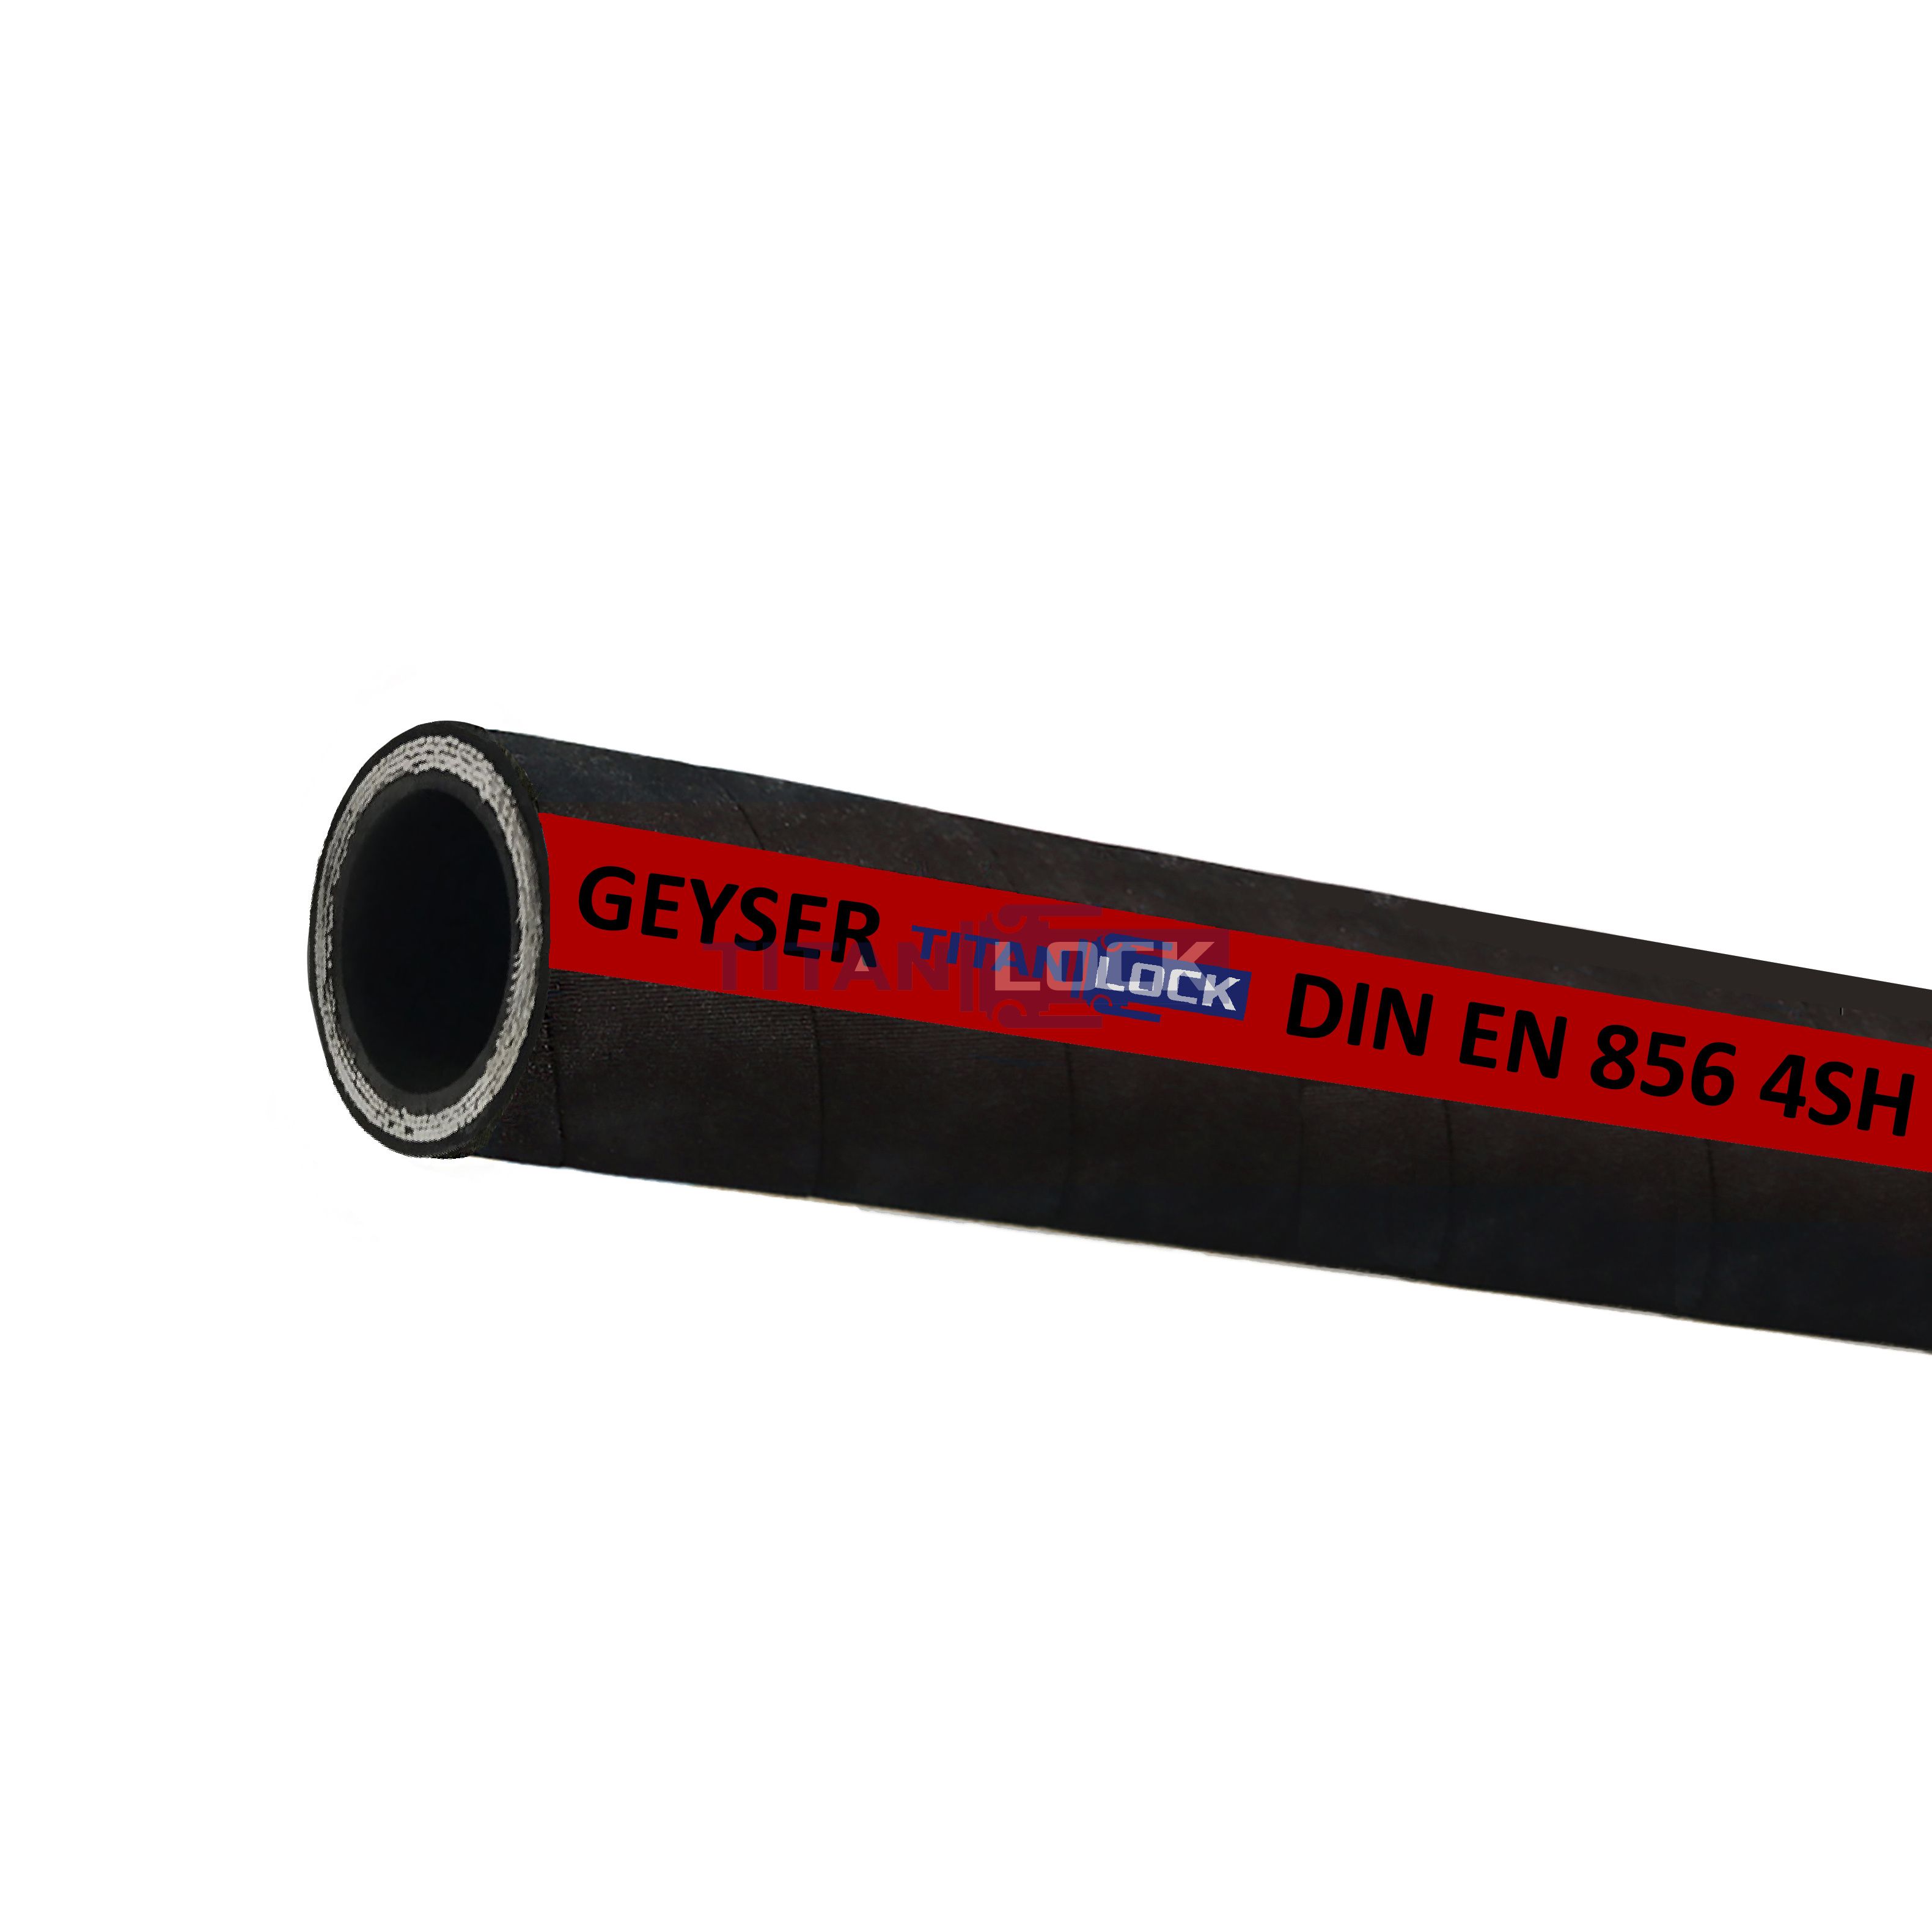 4Рукав высокого давления GEYSER 4SH EN856, внутр.диам. 38мм, TLGY038-4SH TITAN LOCK